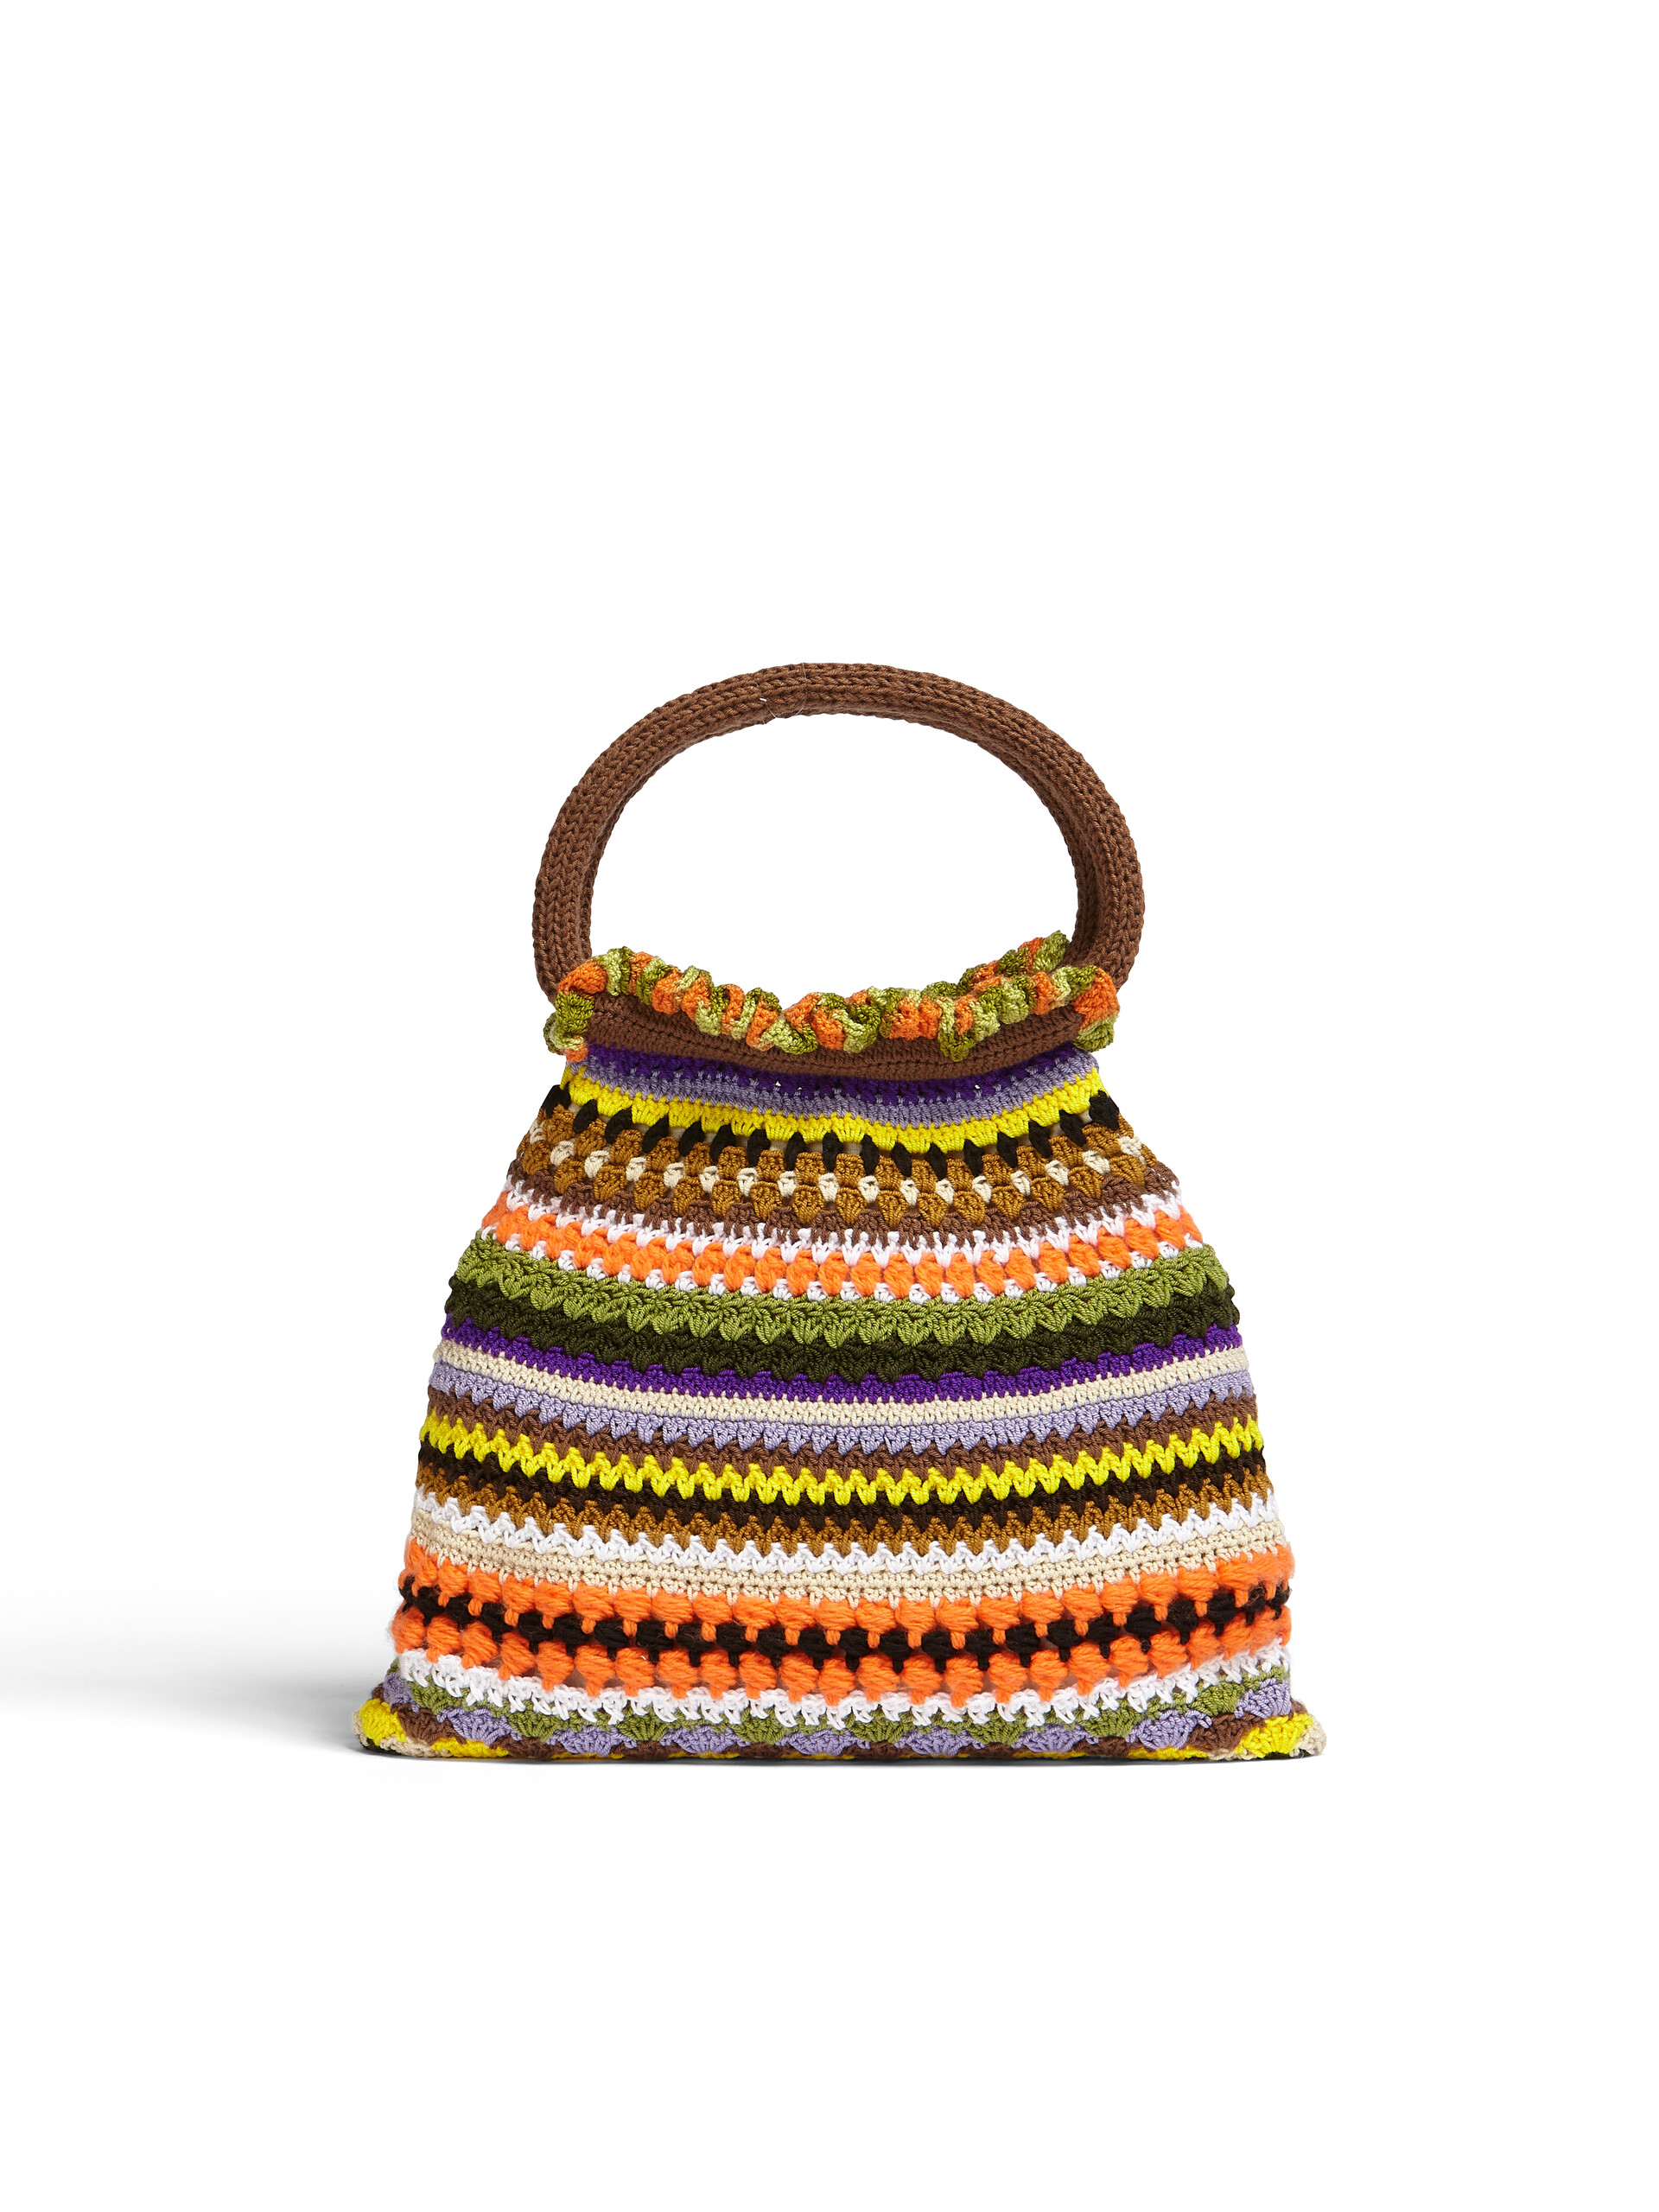 MARNI MARKET GRANNY bag in brown crochet - Furniture - Image 3